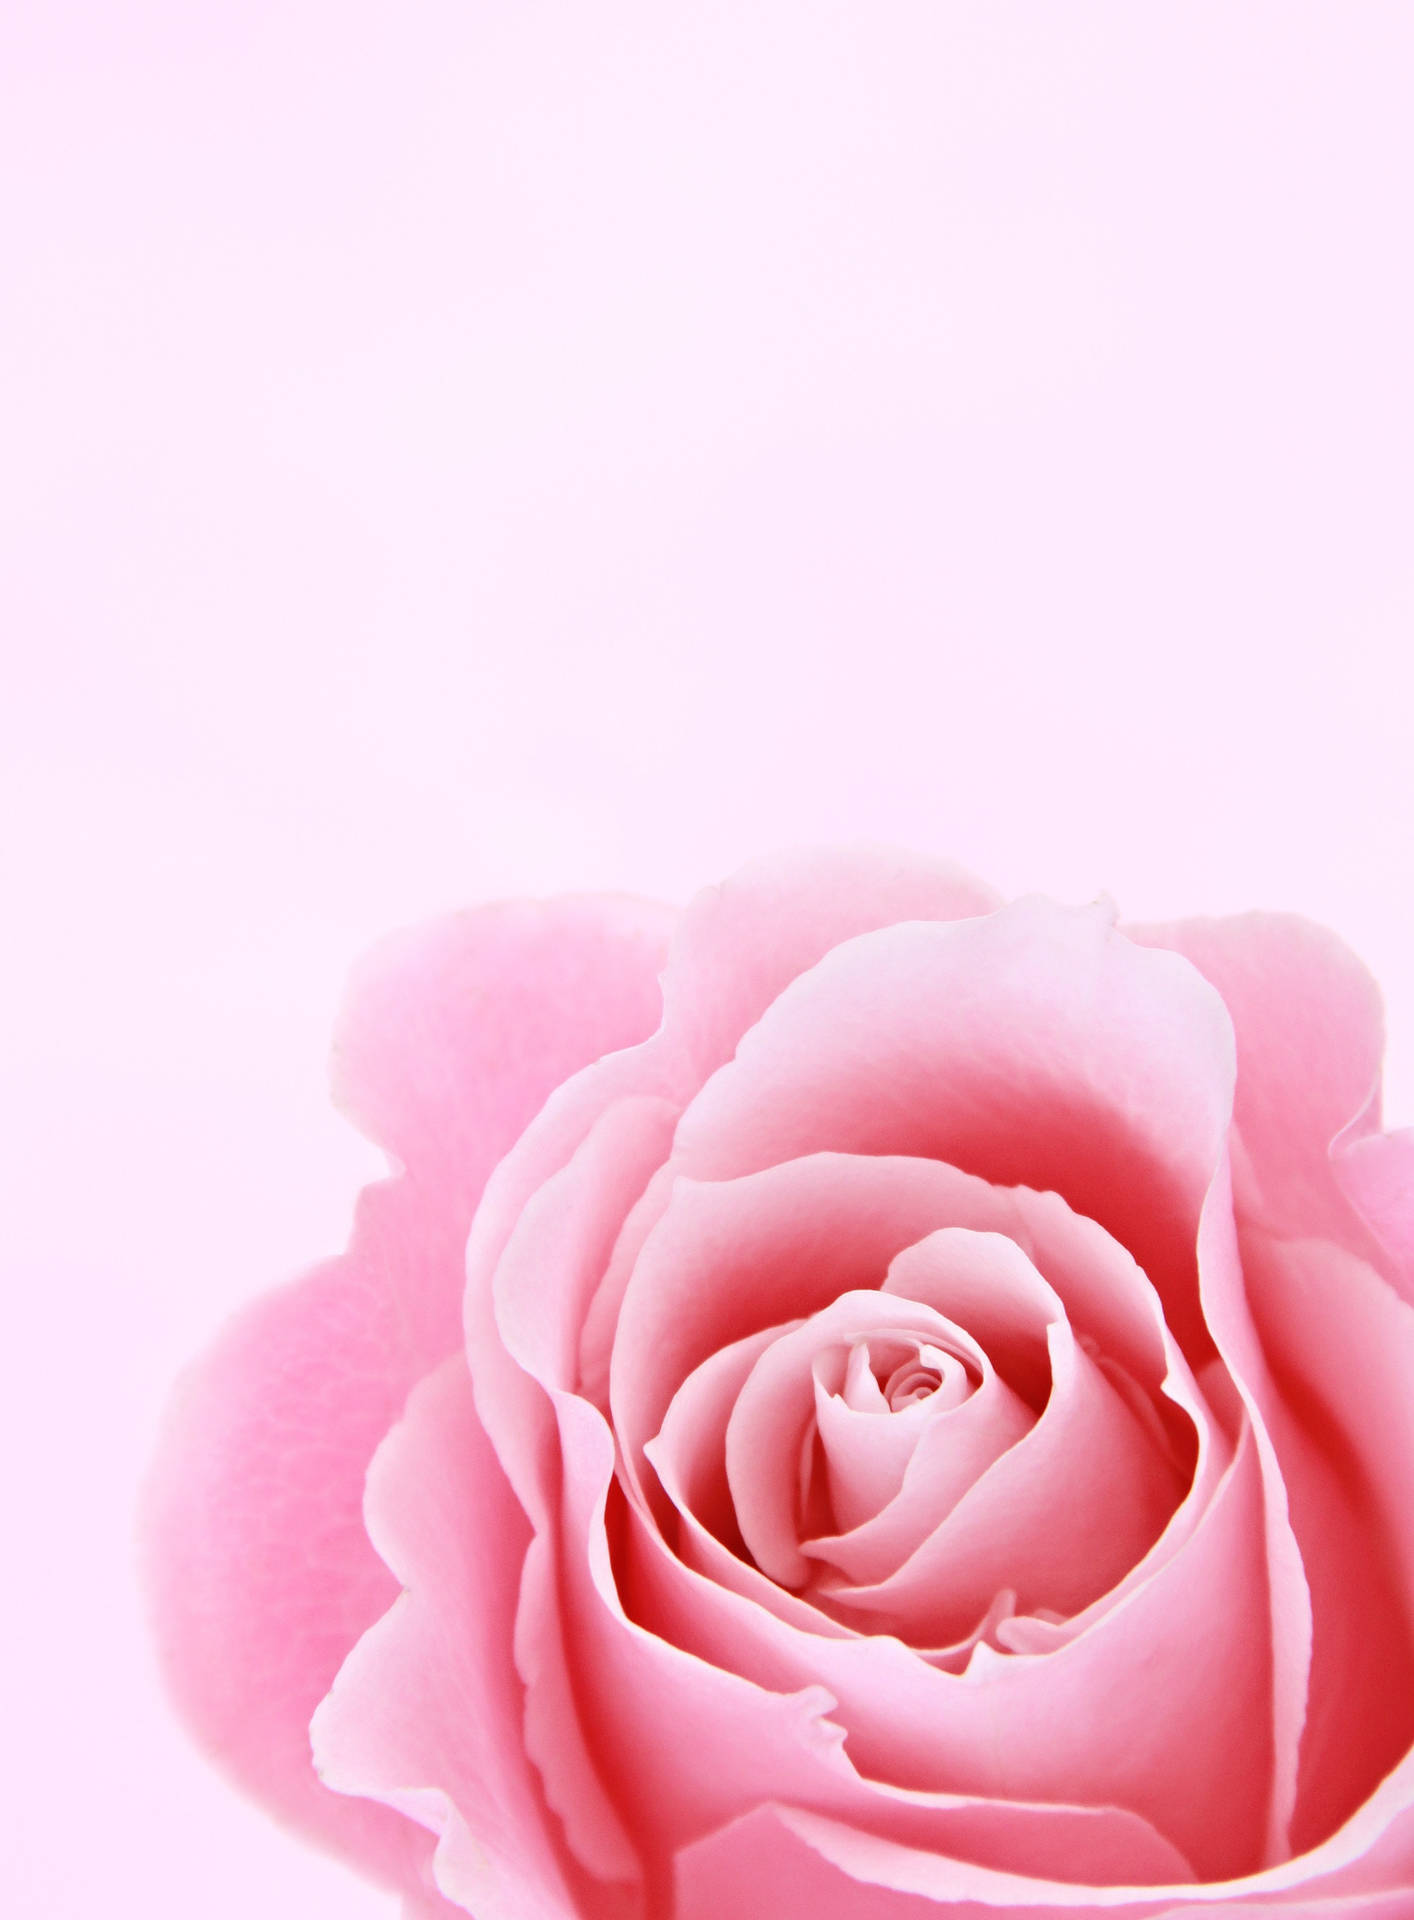 Elegant iPhone Lock Screen with Soft Rose Design Wallpaper